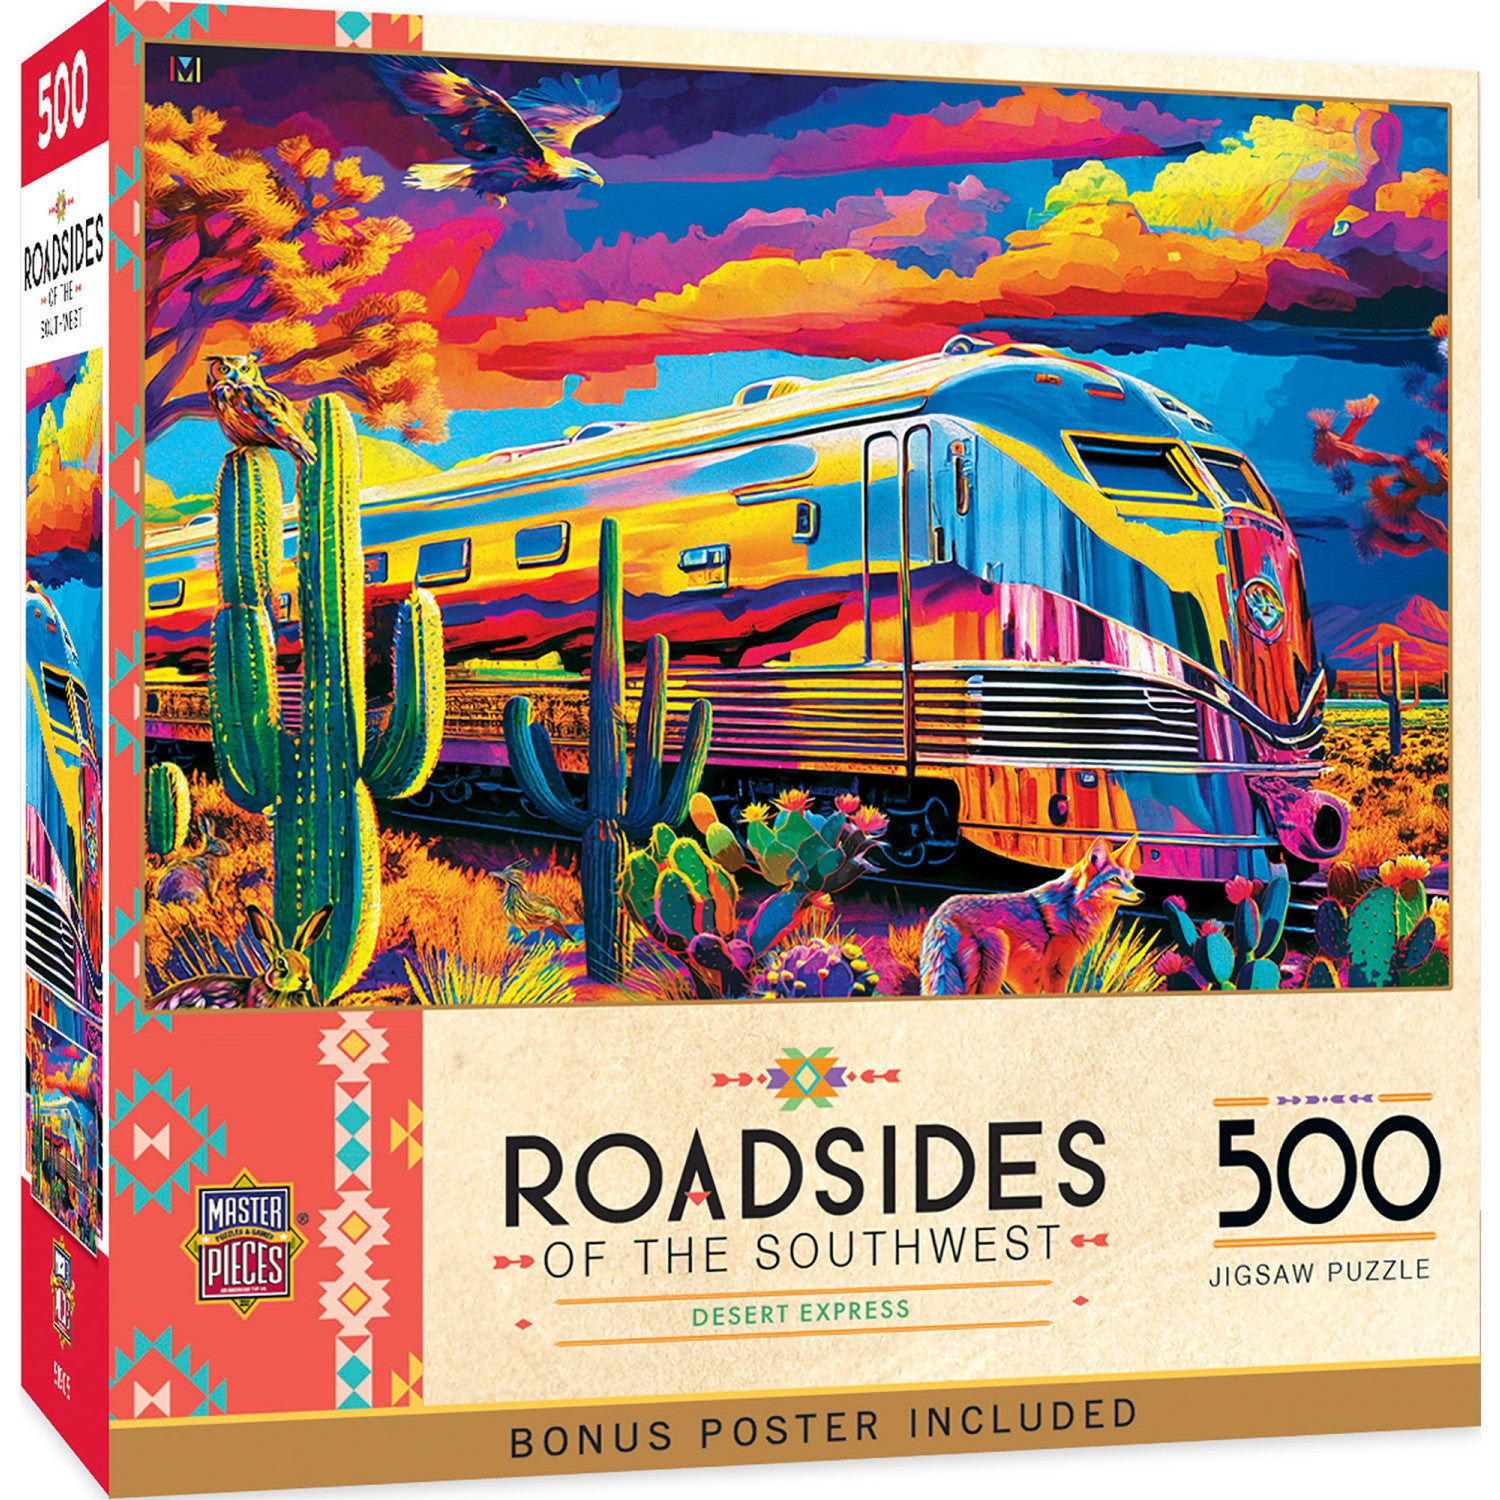 Roadsides of the Southwest - Desert Express 500 Piece Jigsaw Puzzle